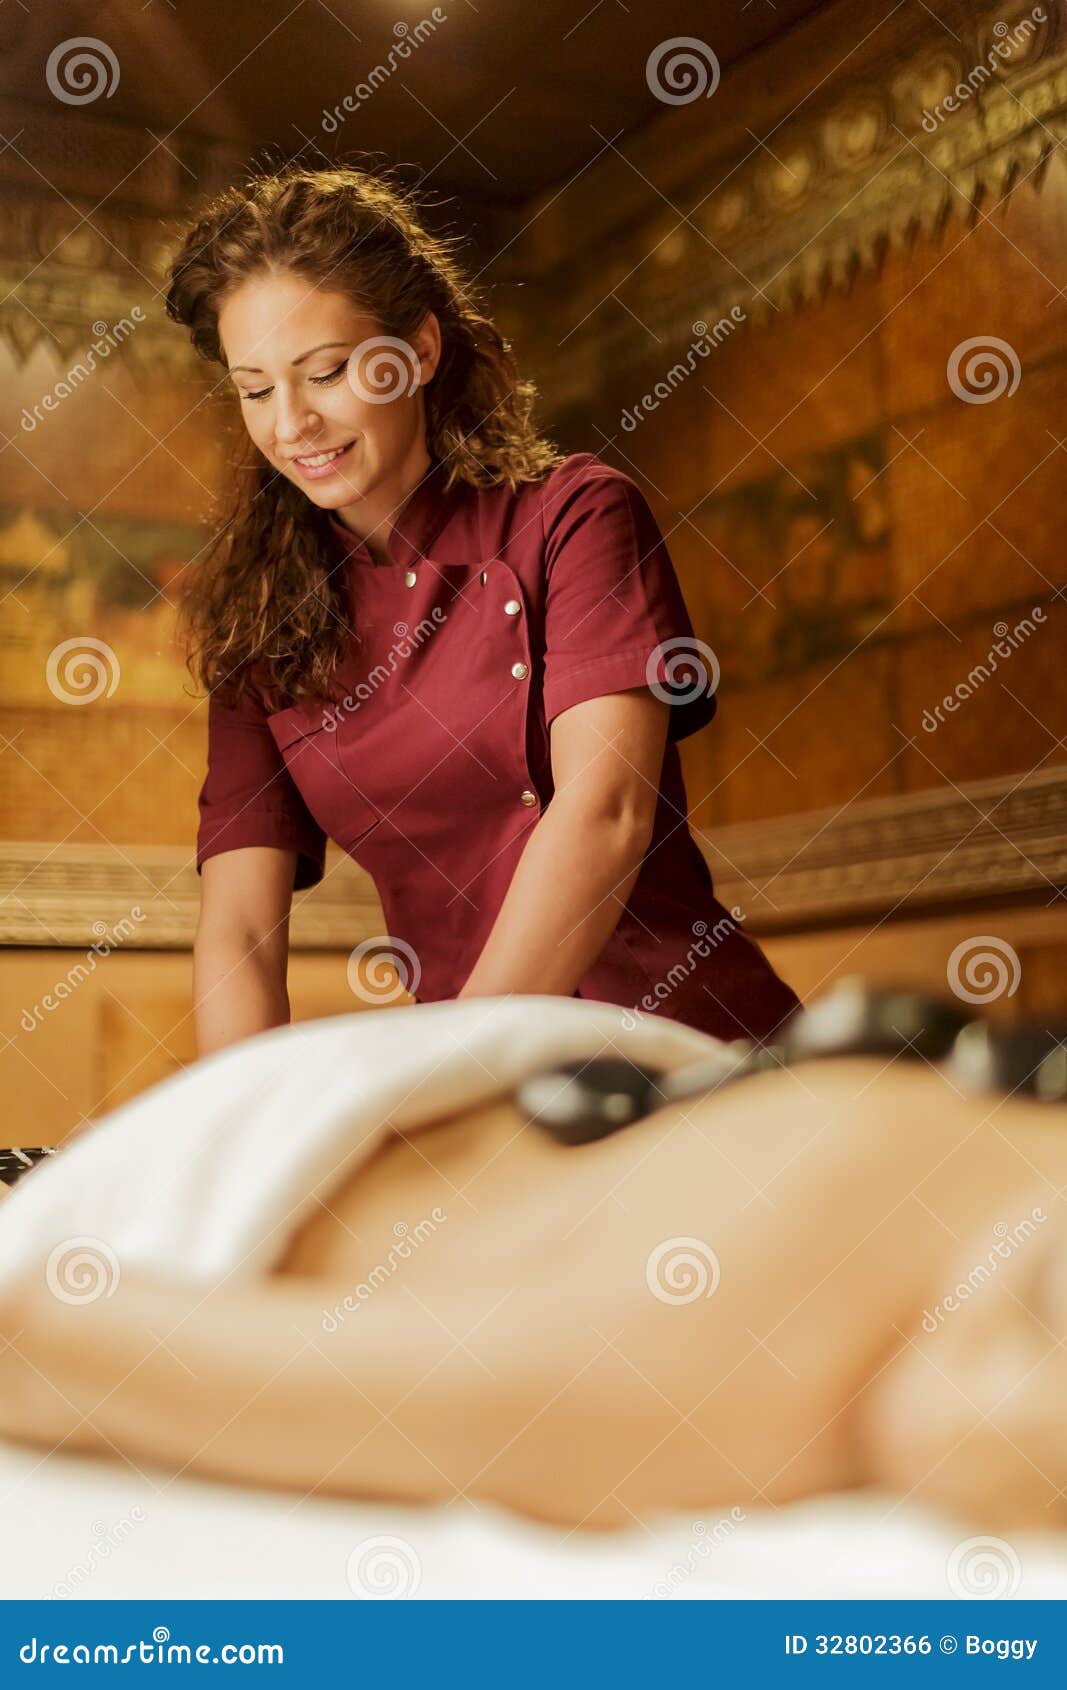 Hot massage therapist